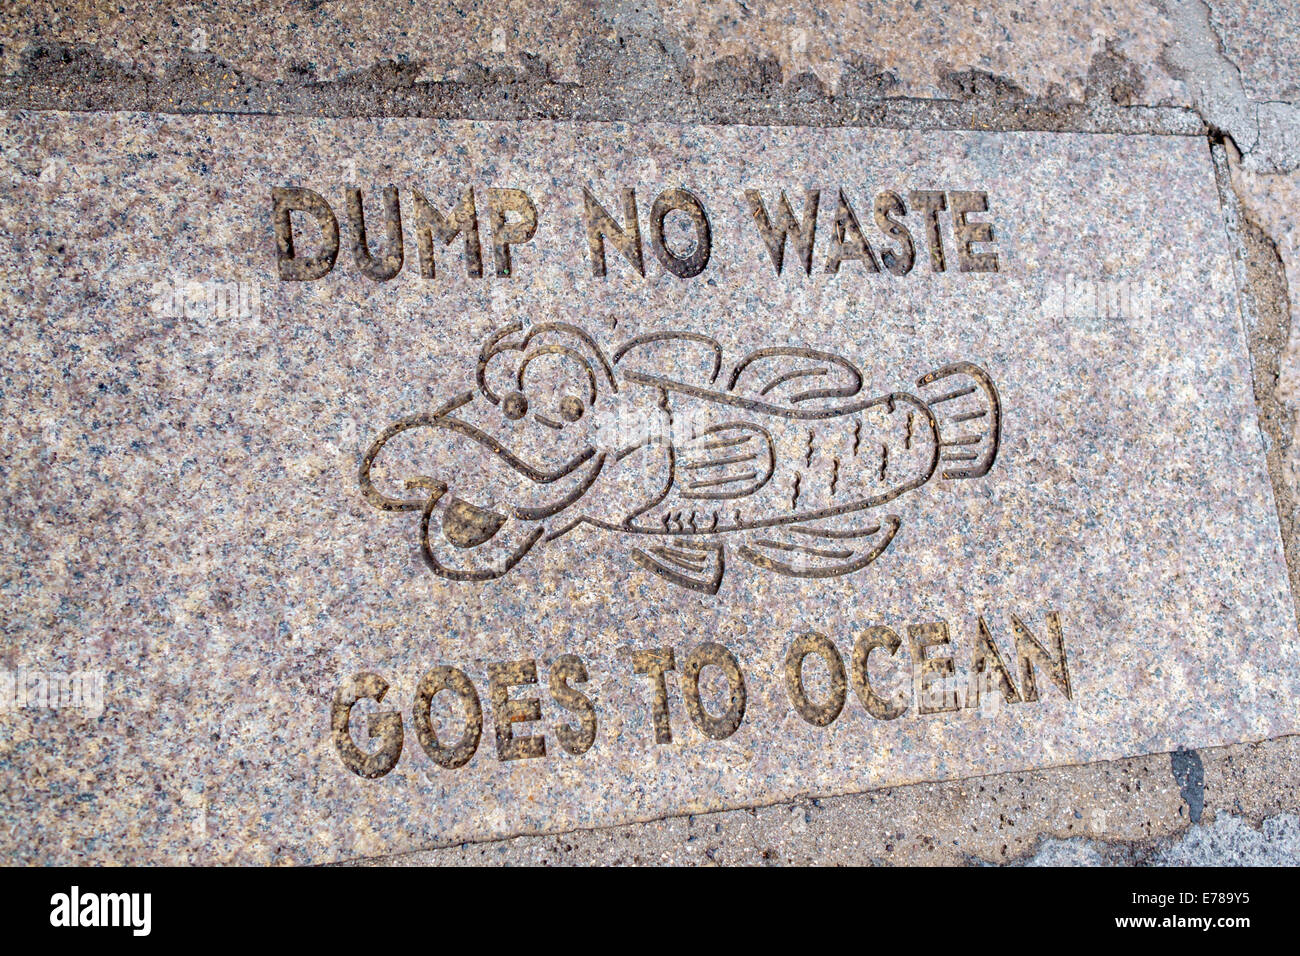 Hawaii, Hawaiian, Oahu, Honolulu, Chinatown, Dump keine Abfälle geht zum Ozean, Rinne, Schild, Warnung, Verschmutzung, Prävention, USA, USA, USA, Amerika Polynesien, HI Stockfoto